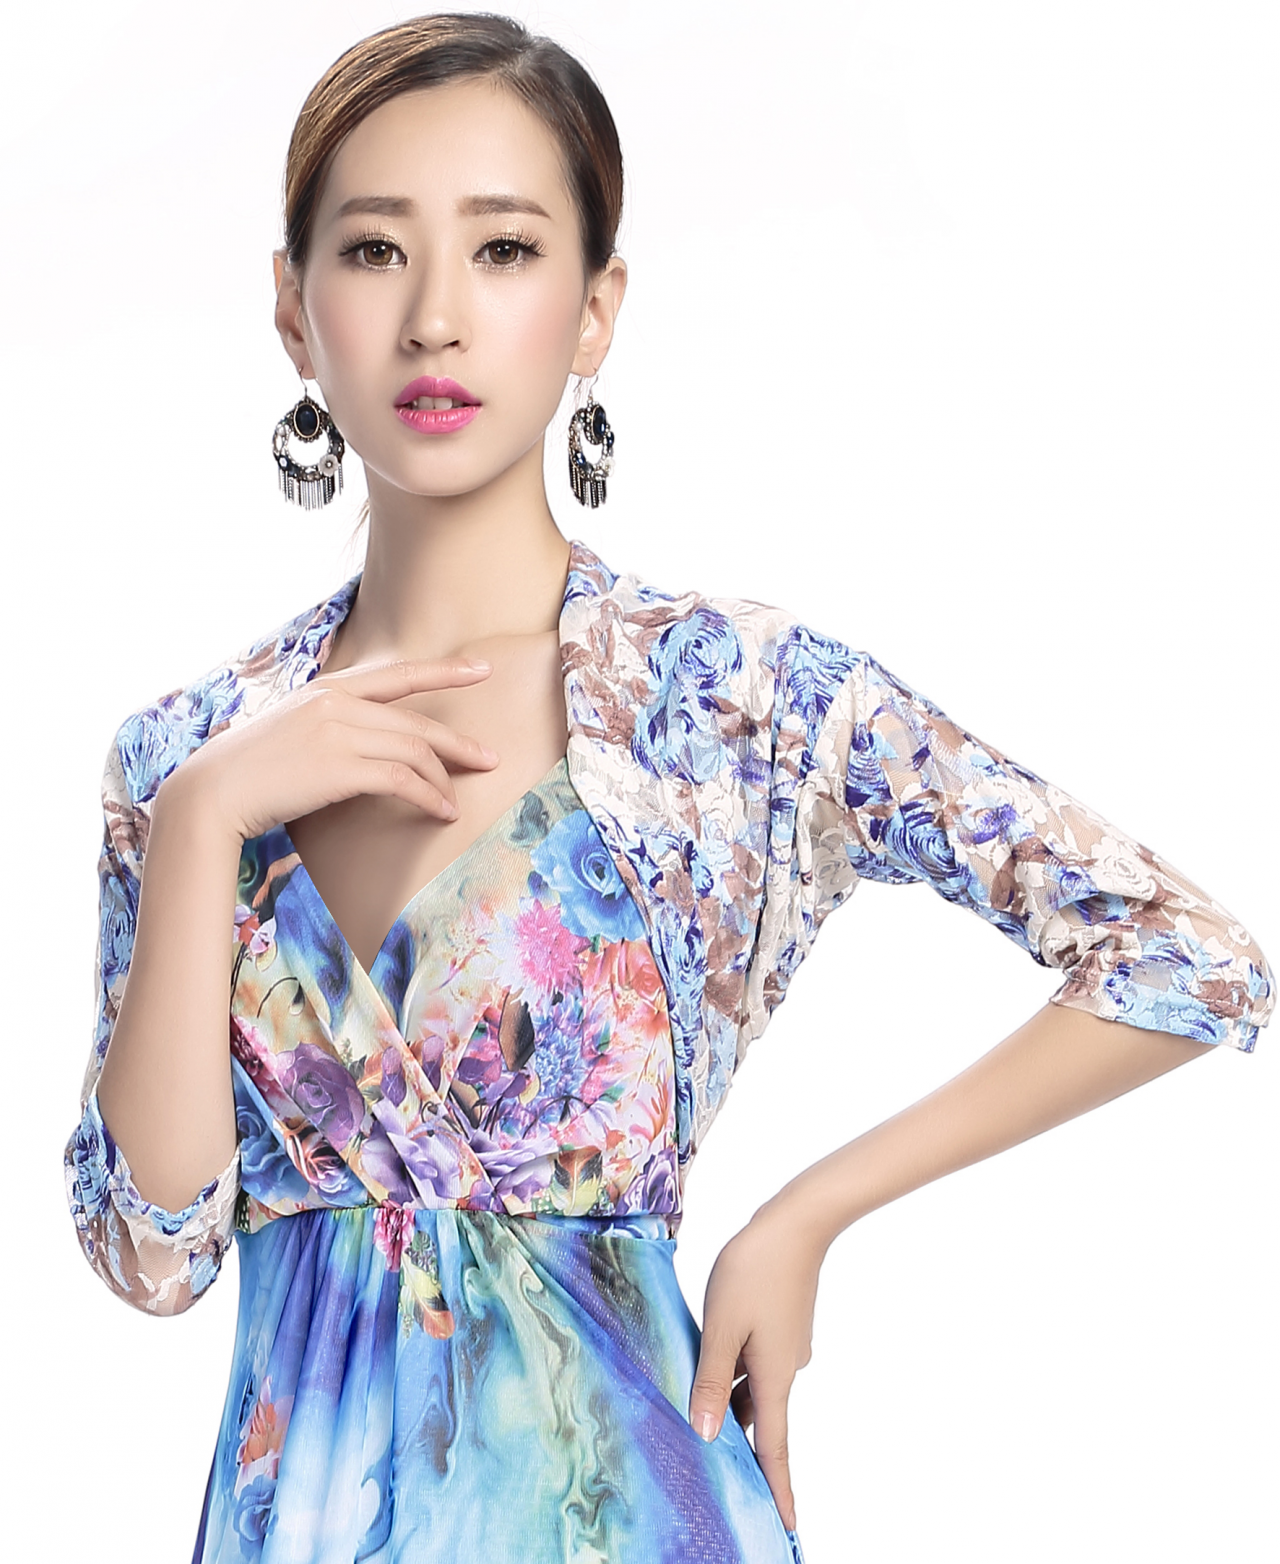 Yibeizi Women's Floral Lace Crochet Bolero Shrug Cardigan Crop Top Outwear